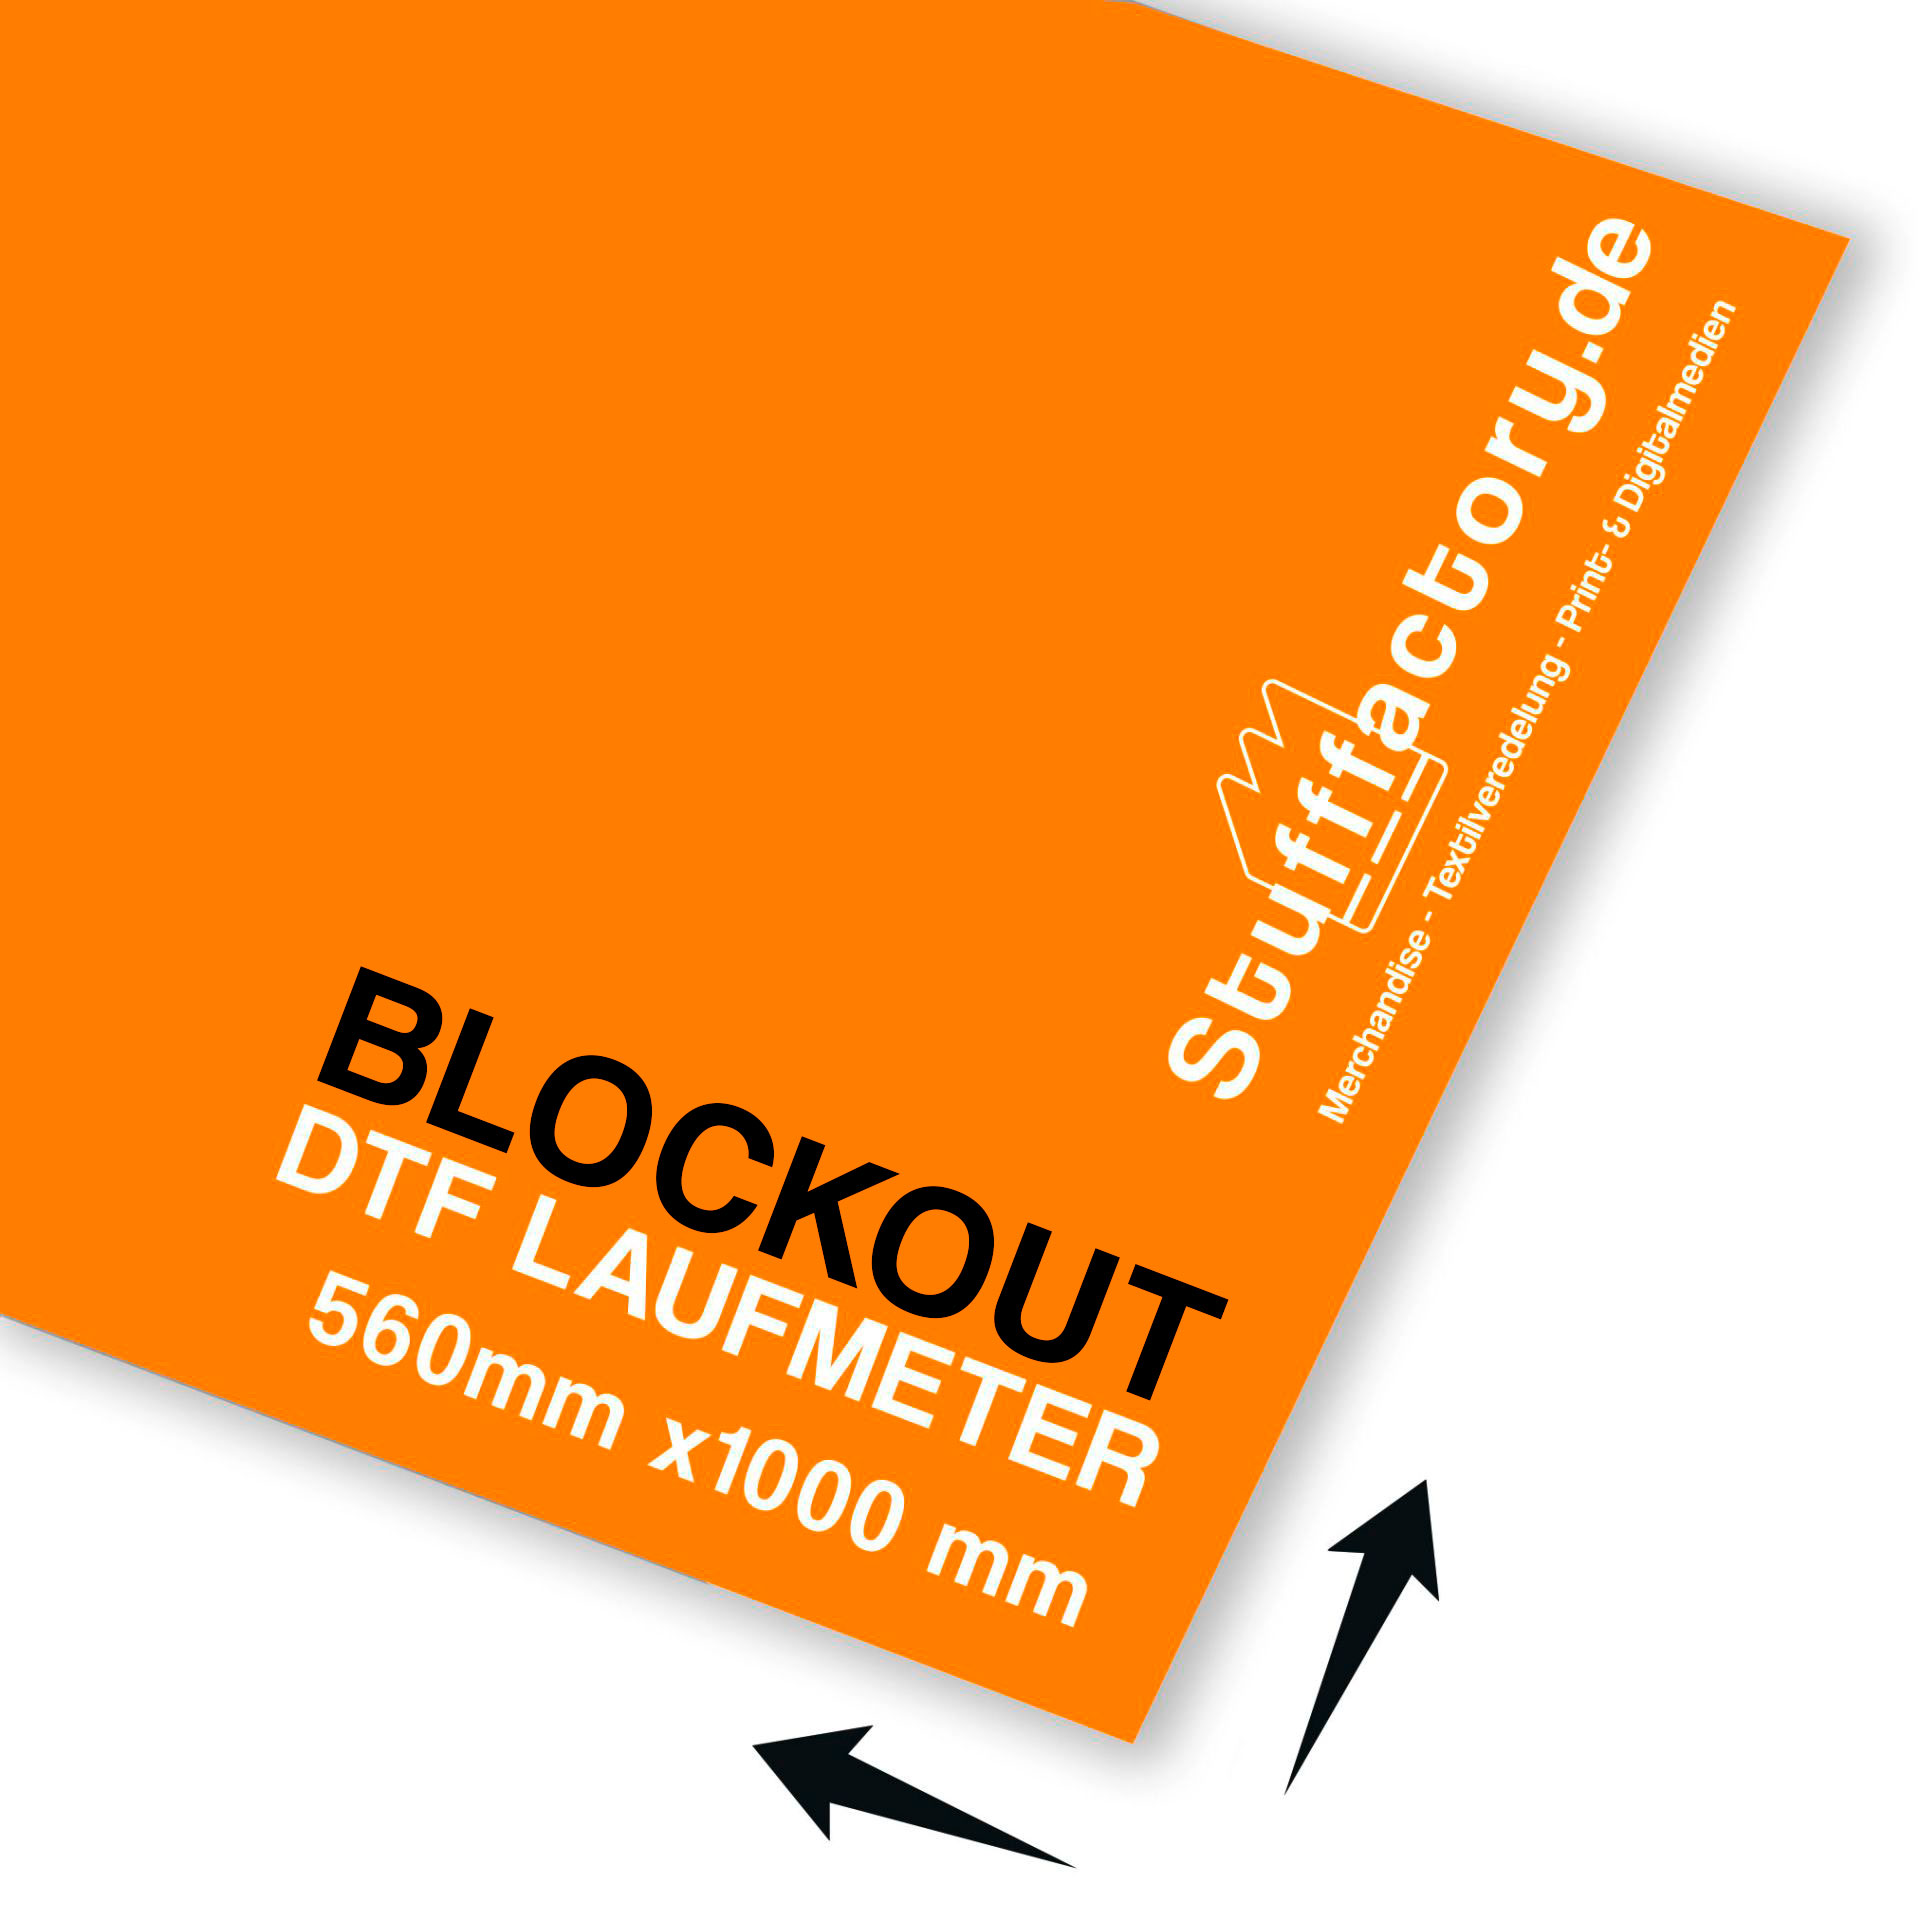 DTF Transfer 560 x 1000 mm - BLOCKOUT - Laufmeter / Meterware